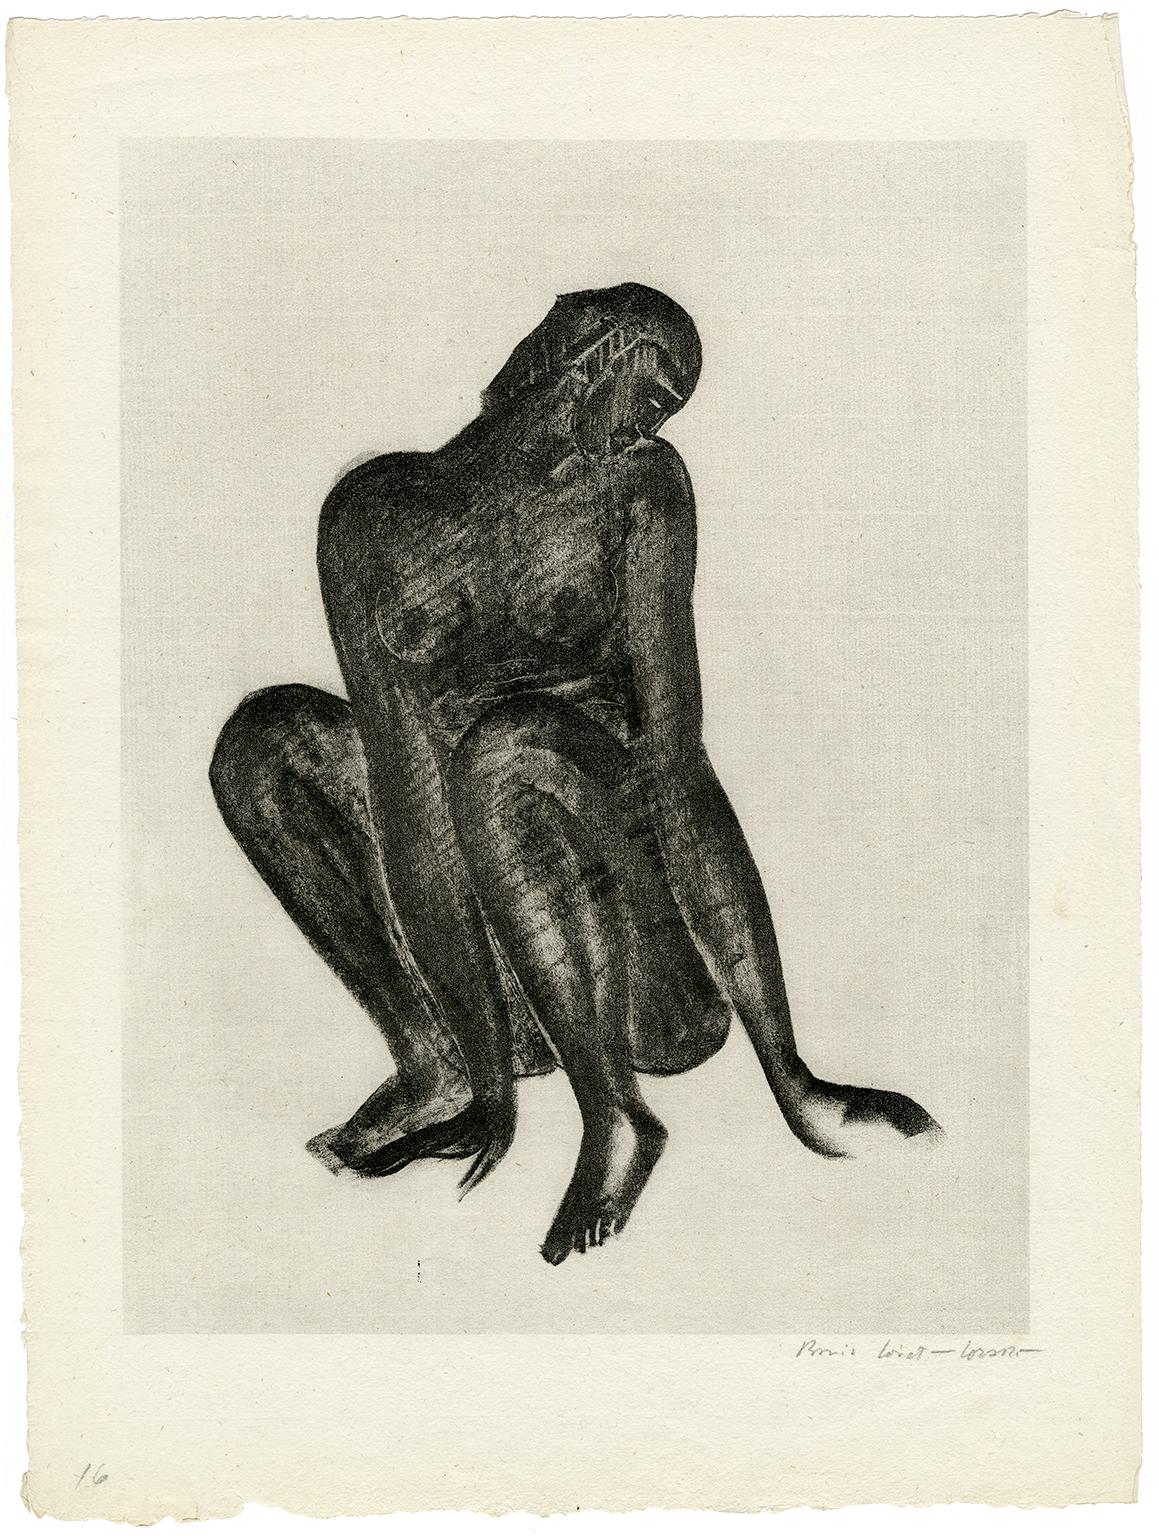 Untitled (Black Woman Crouching) - Print by Boris Lovet-Lorski